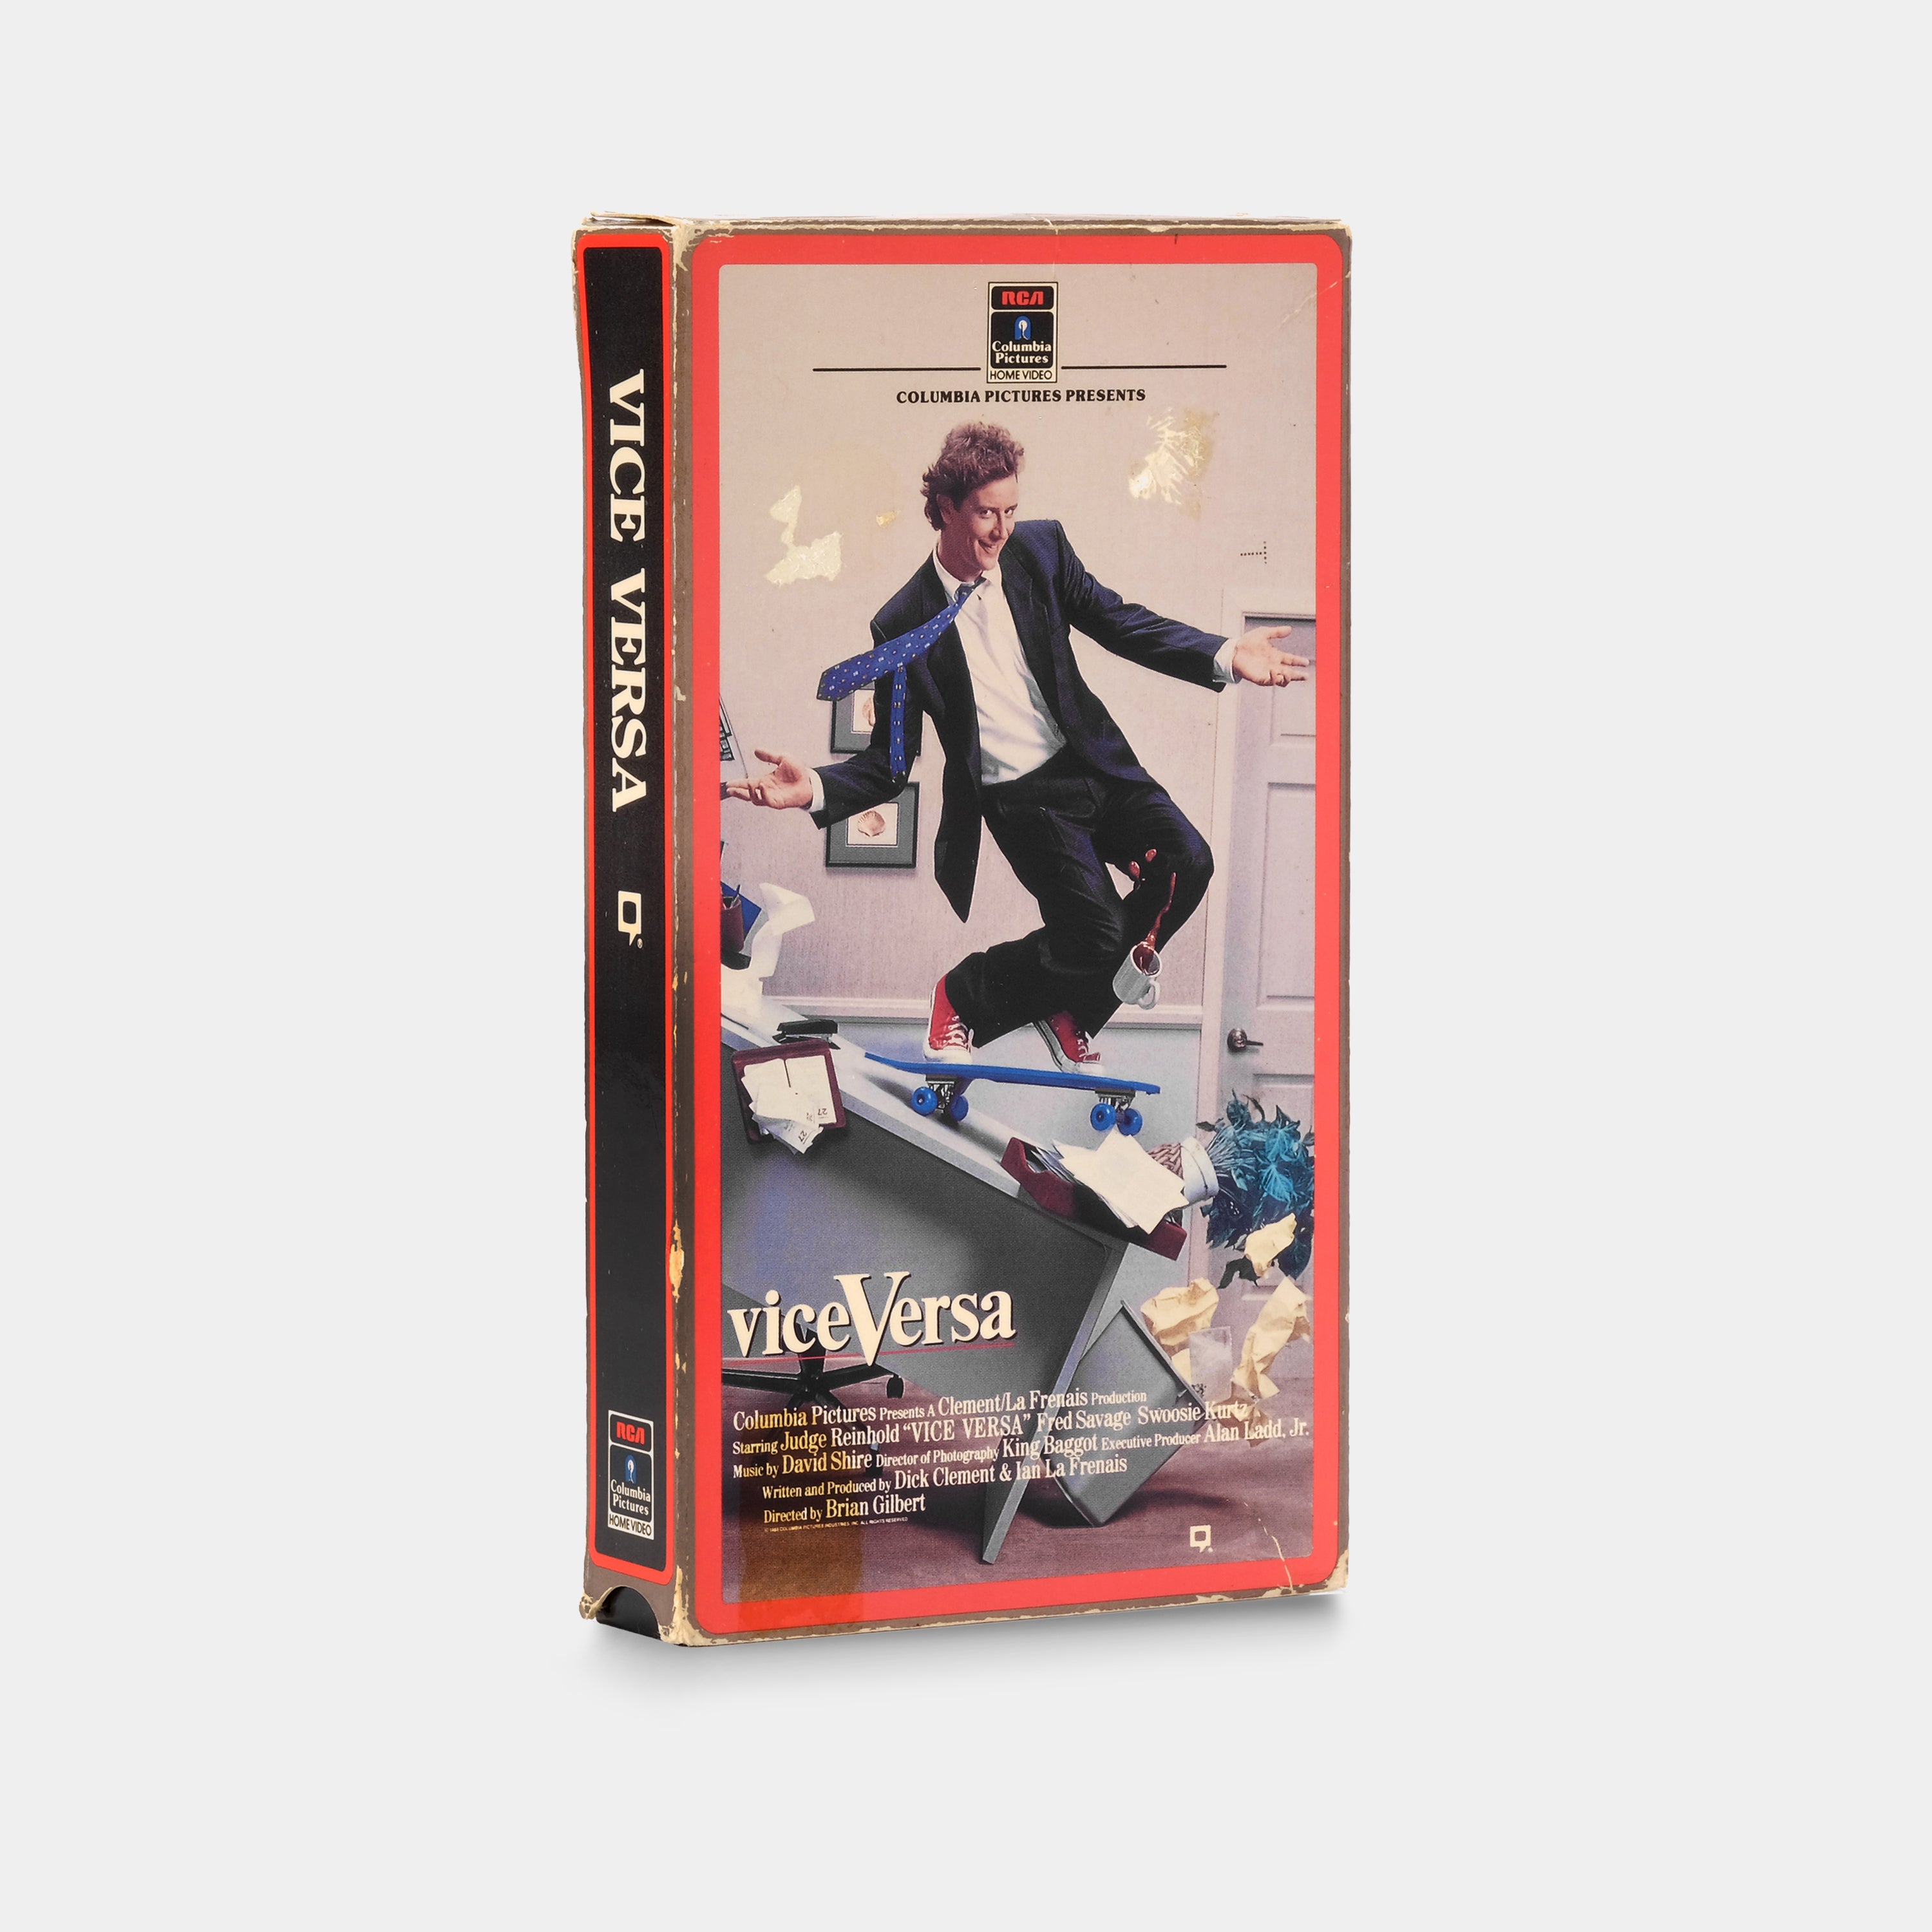 Vice Versa VHS Tape